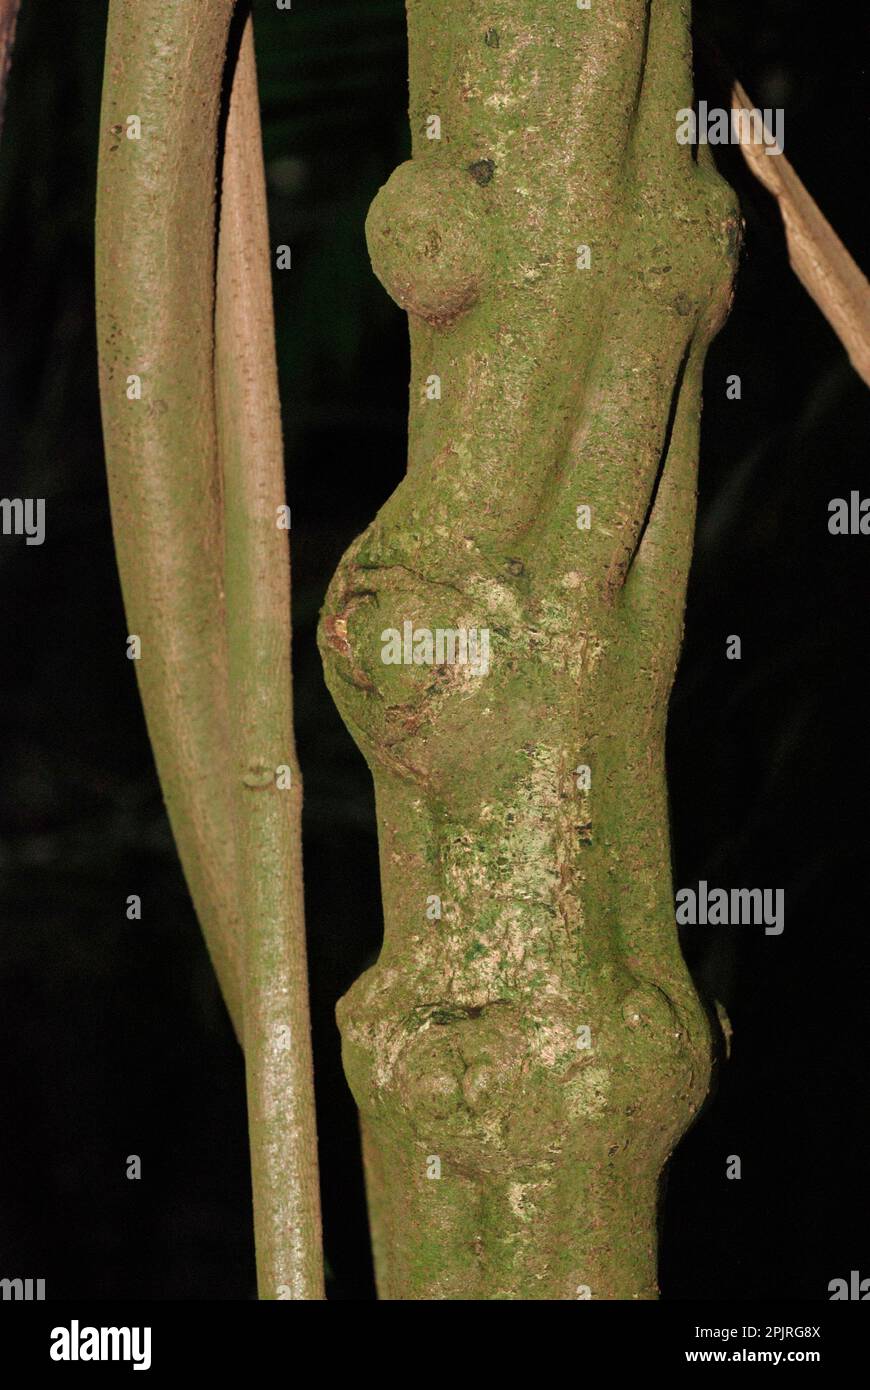 Yage (Banisteriopsis caapi) Foto Stock